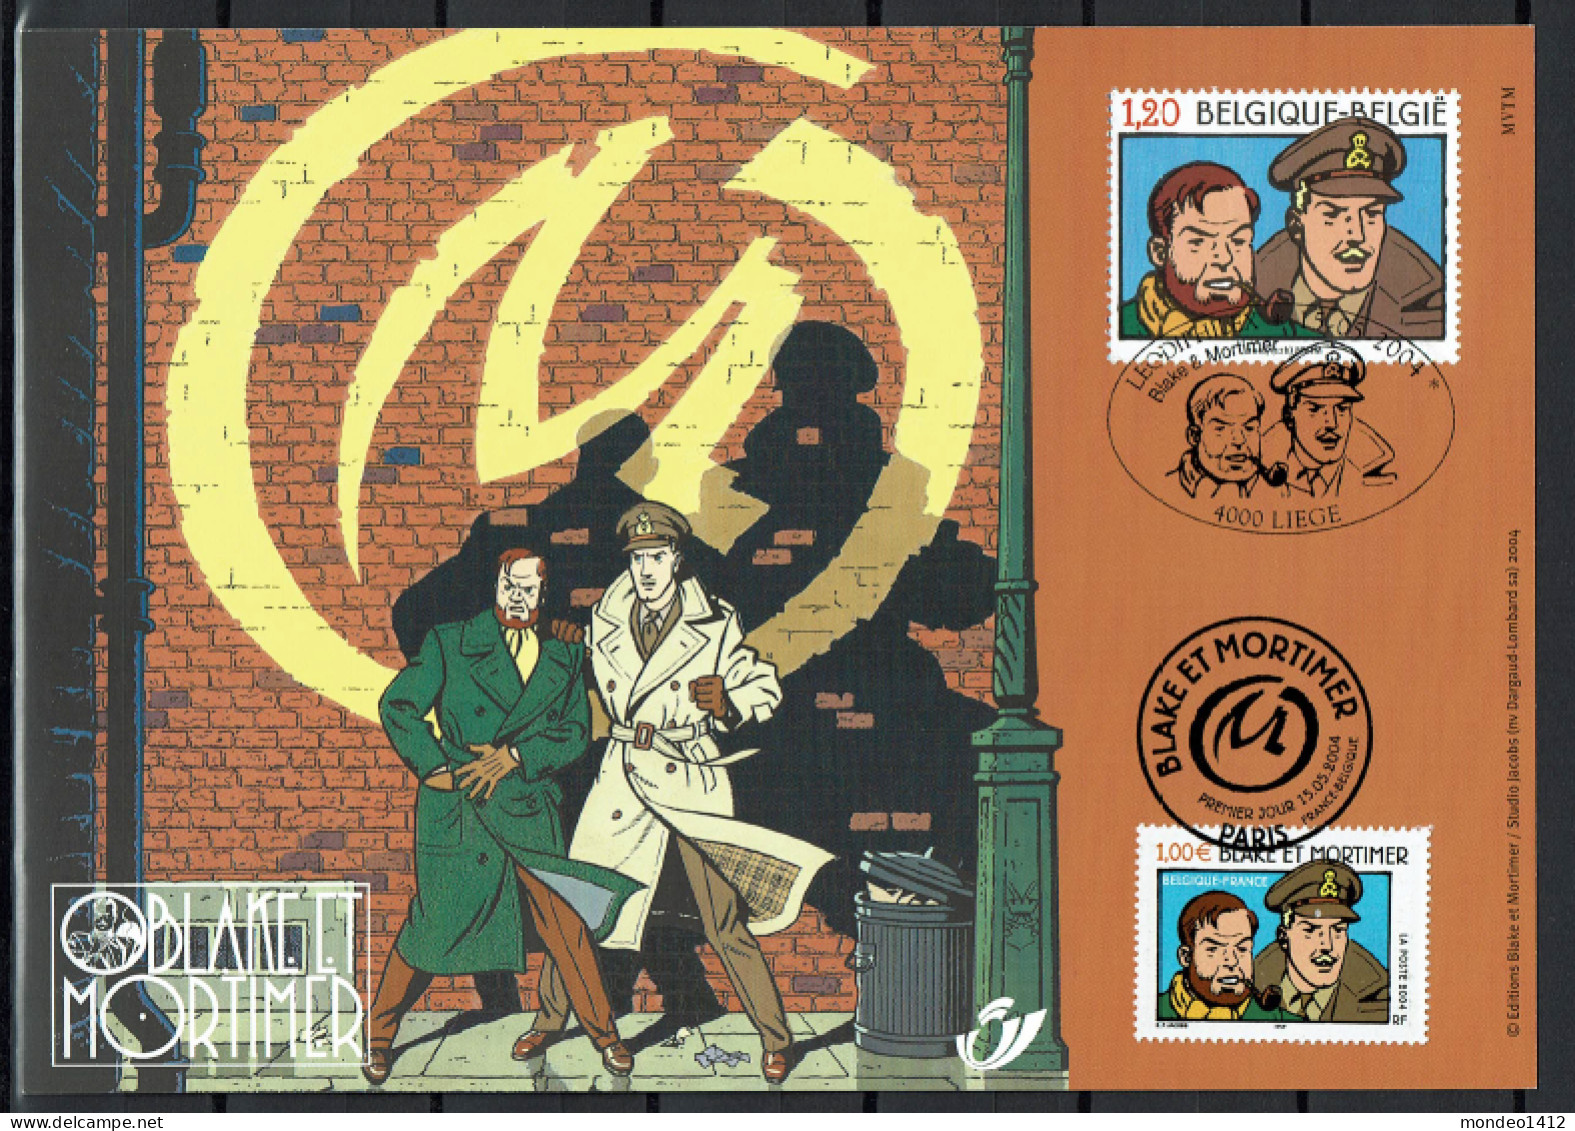 3283 HK + Timbres + Blocs - Blake & Mortimer, Comics, Strops, BD Uitgifte België/Frankrijk - Belgique/France - Souvenir Cards - Joint Issues [HK]